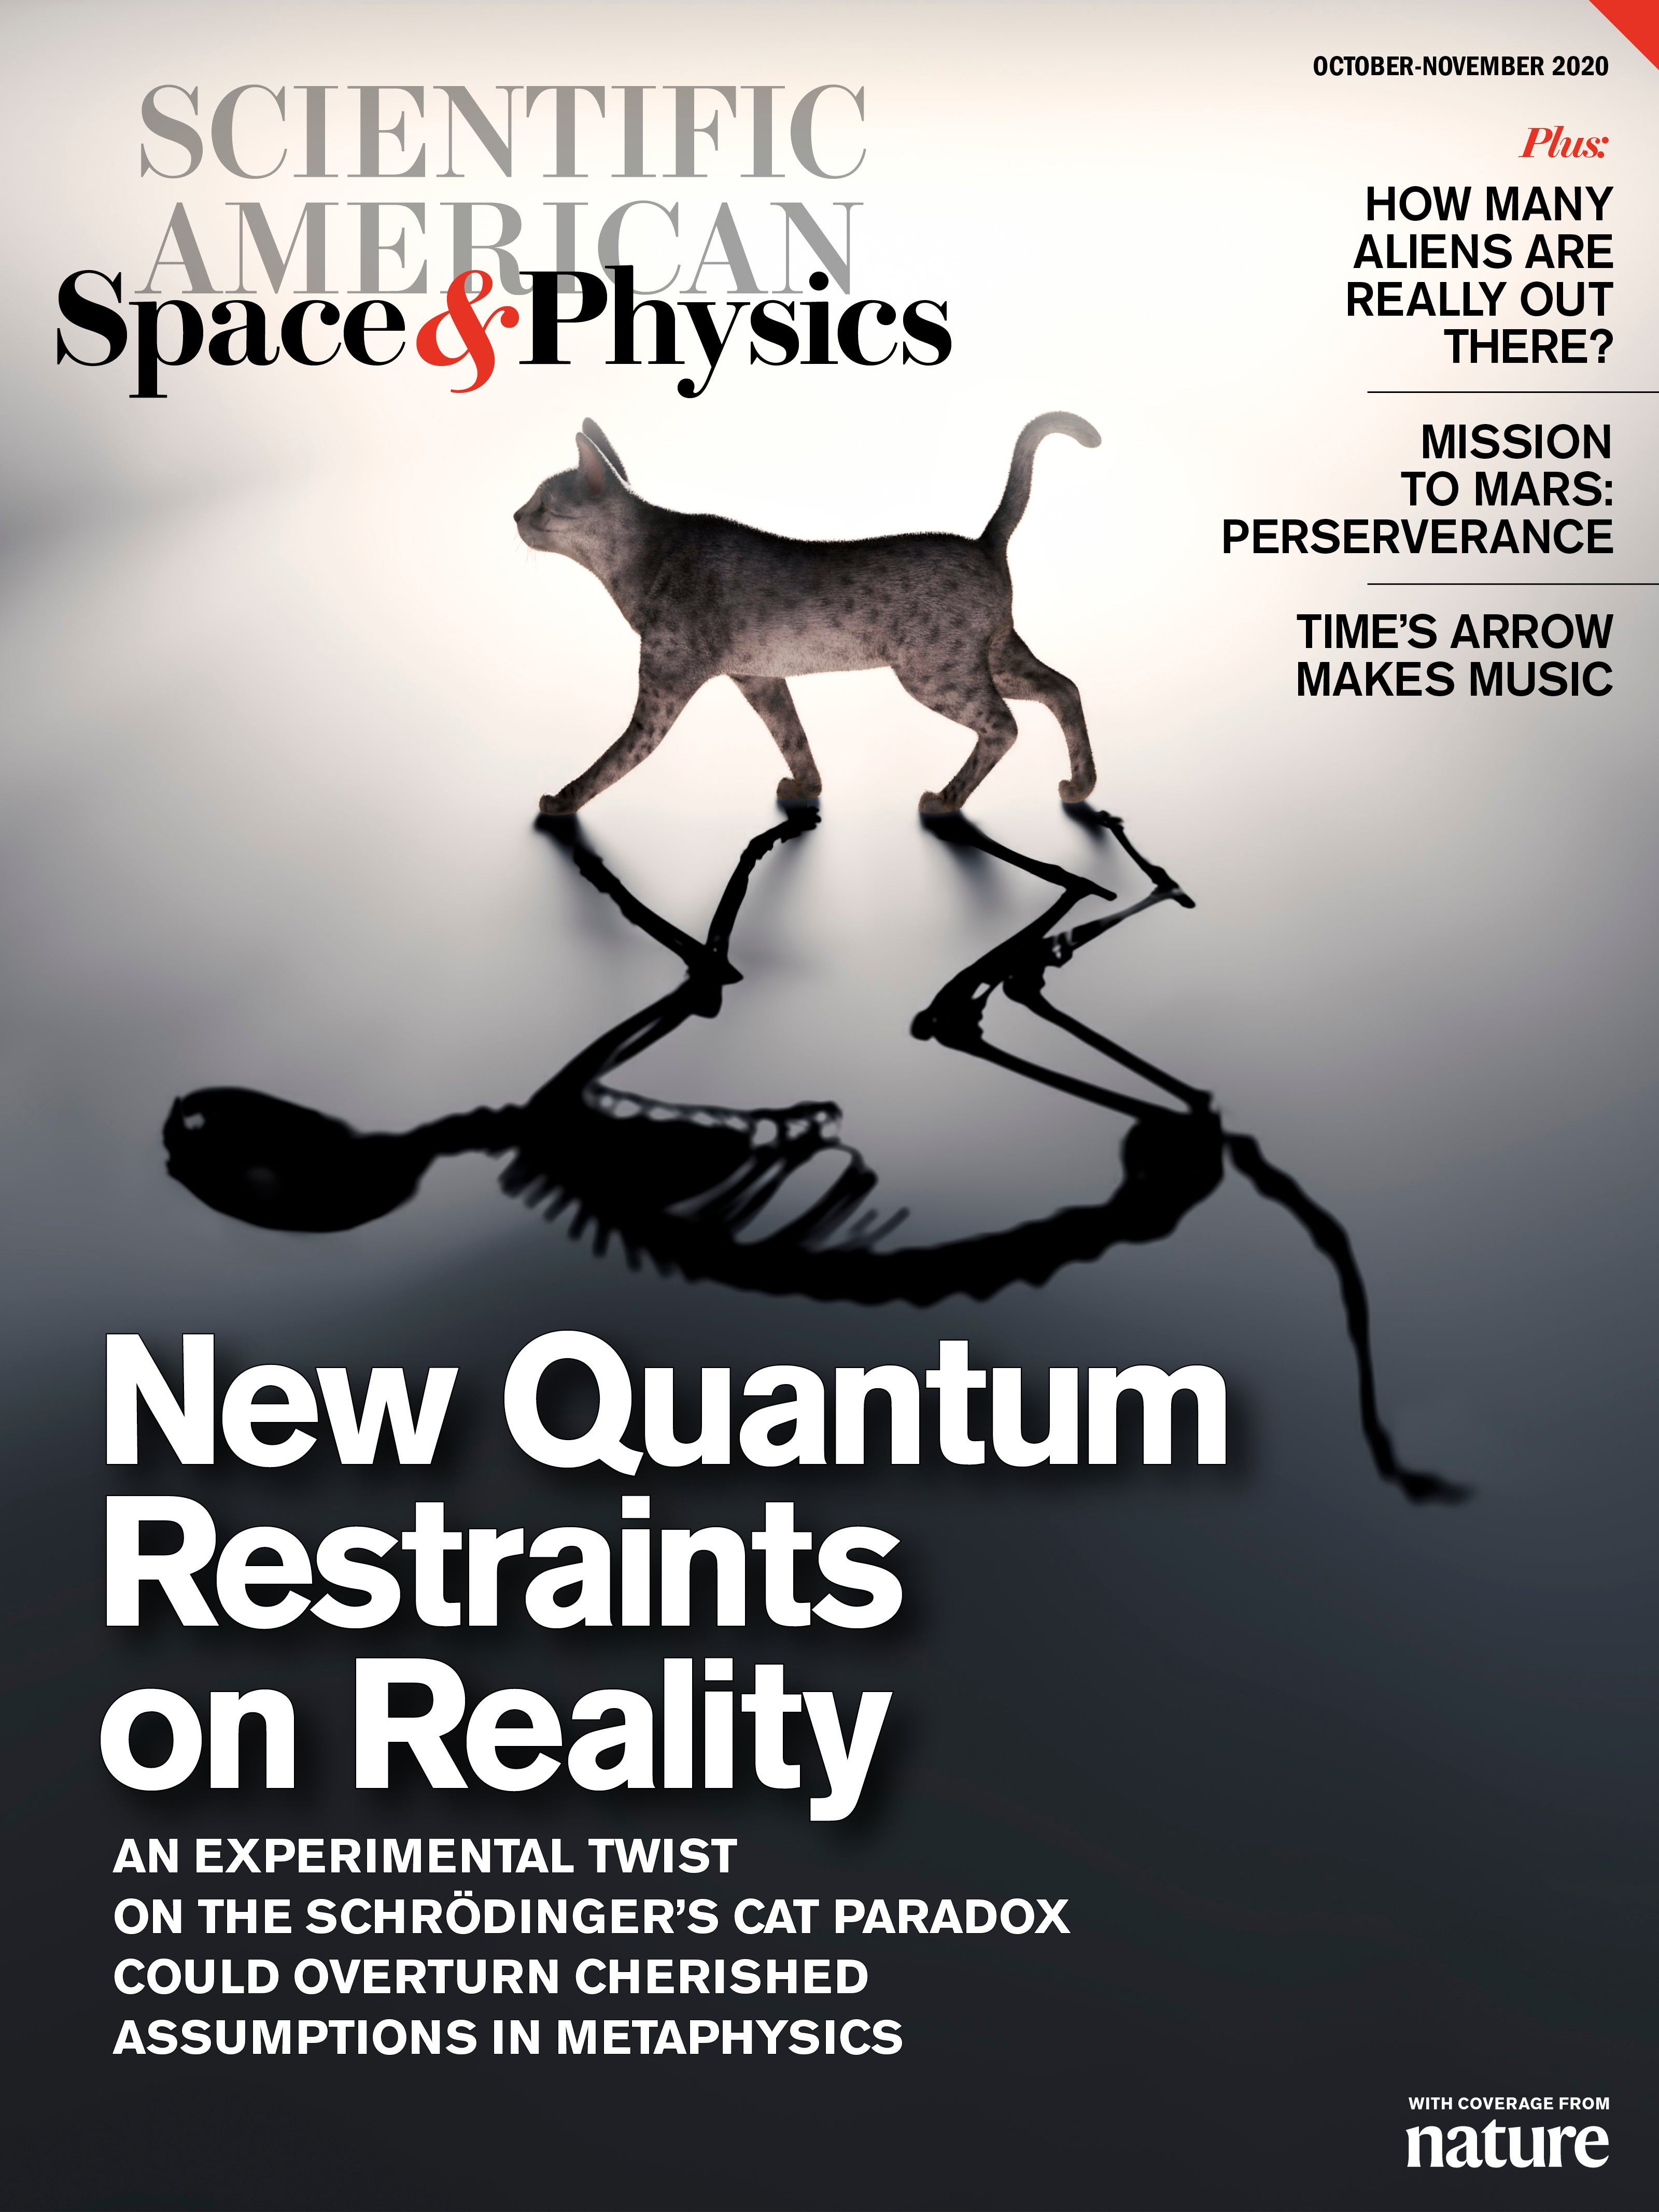 Scientific American Space & Physics, Volume 3, Issue 5